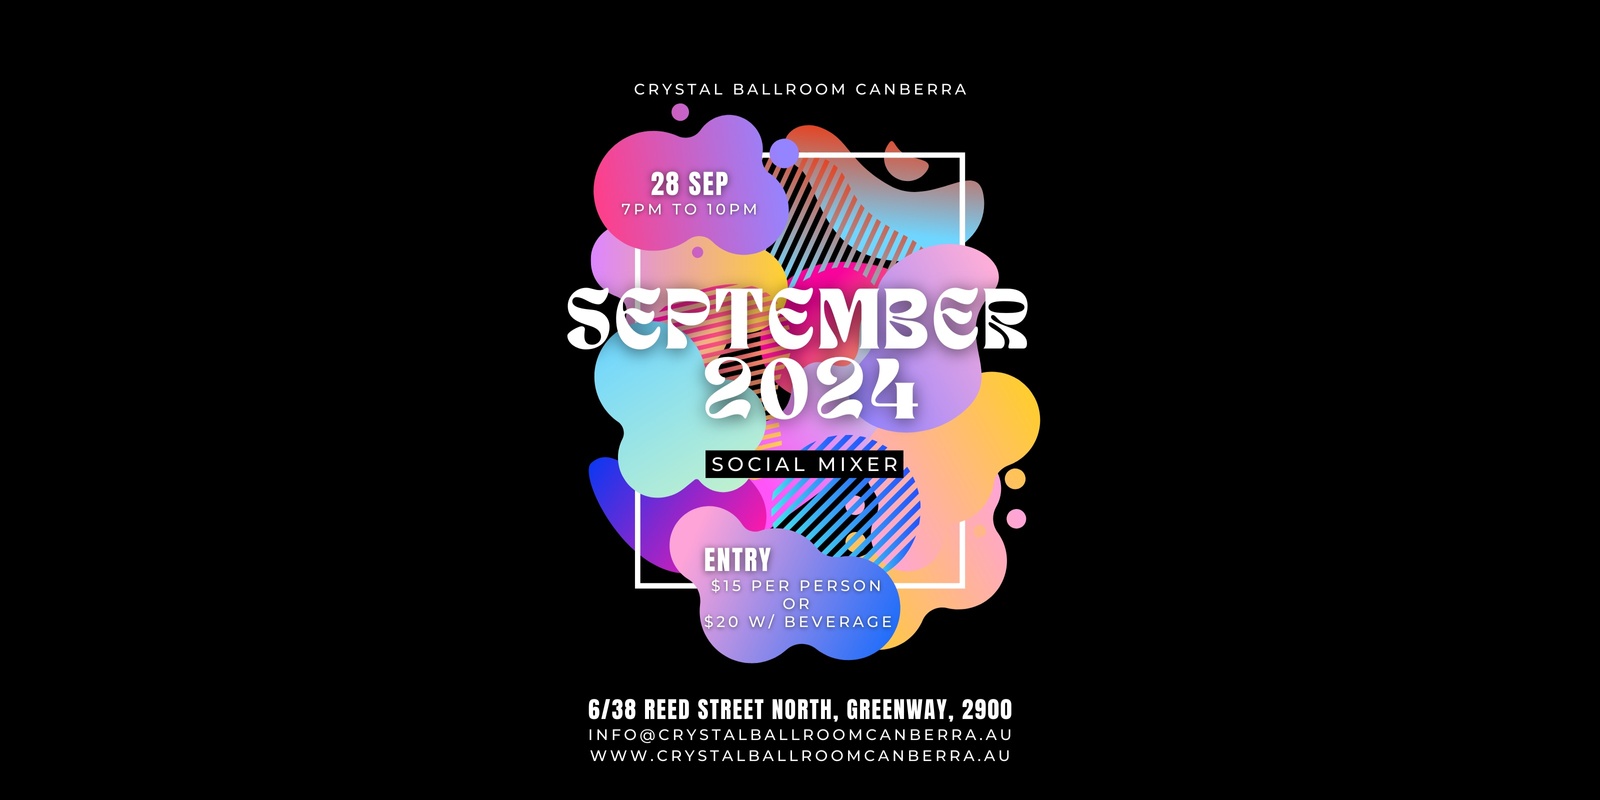 Banner image for Crystal Ballroom Canberra - September Social Mixer